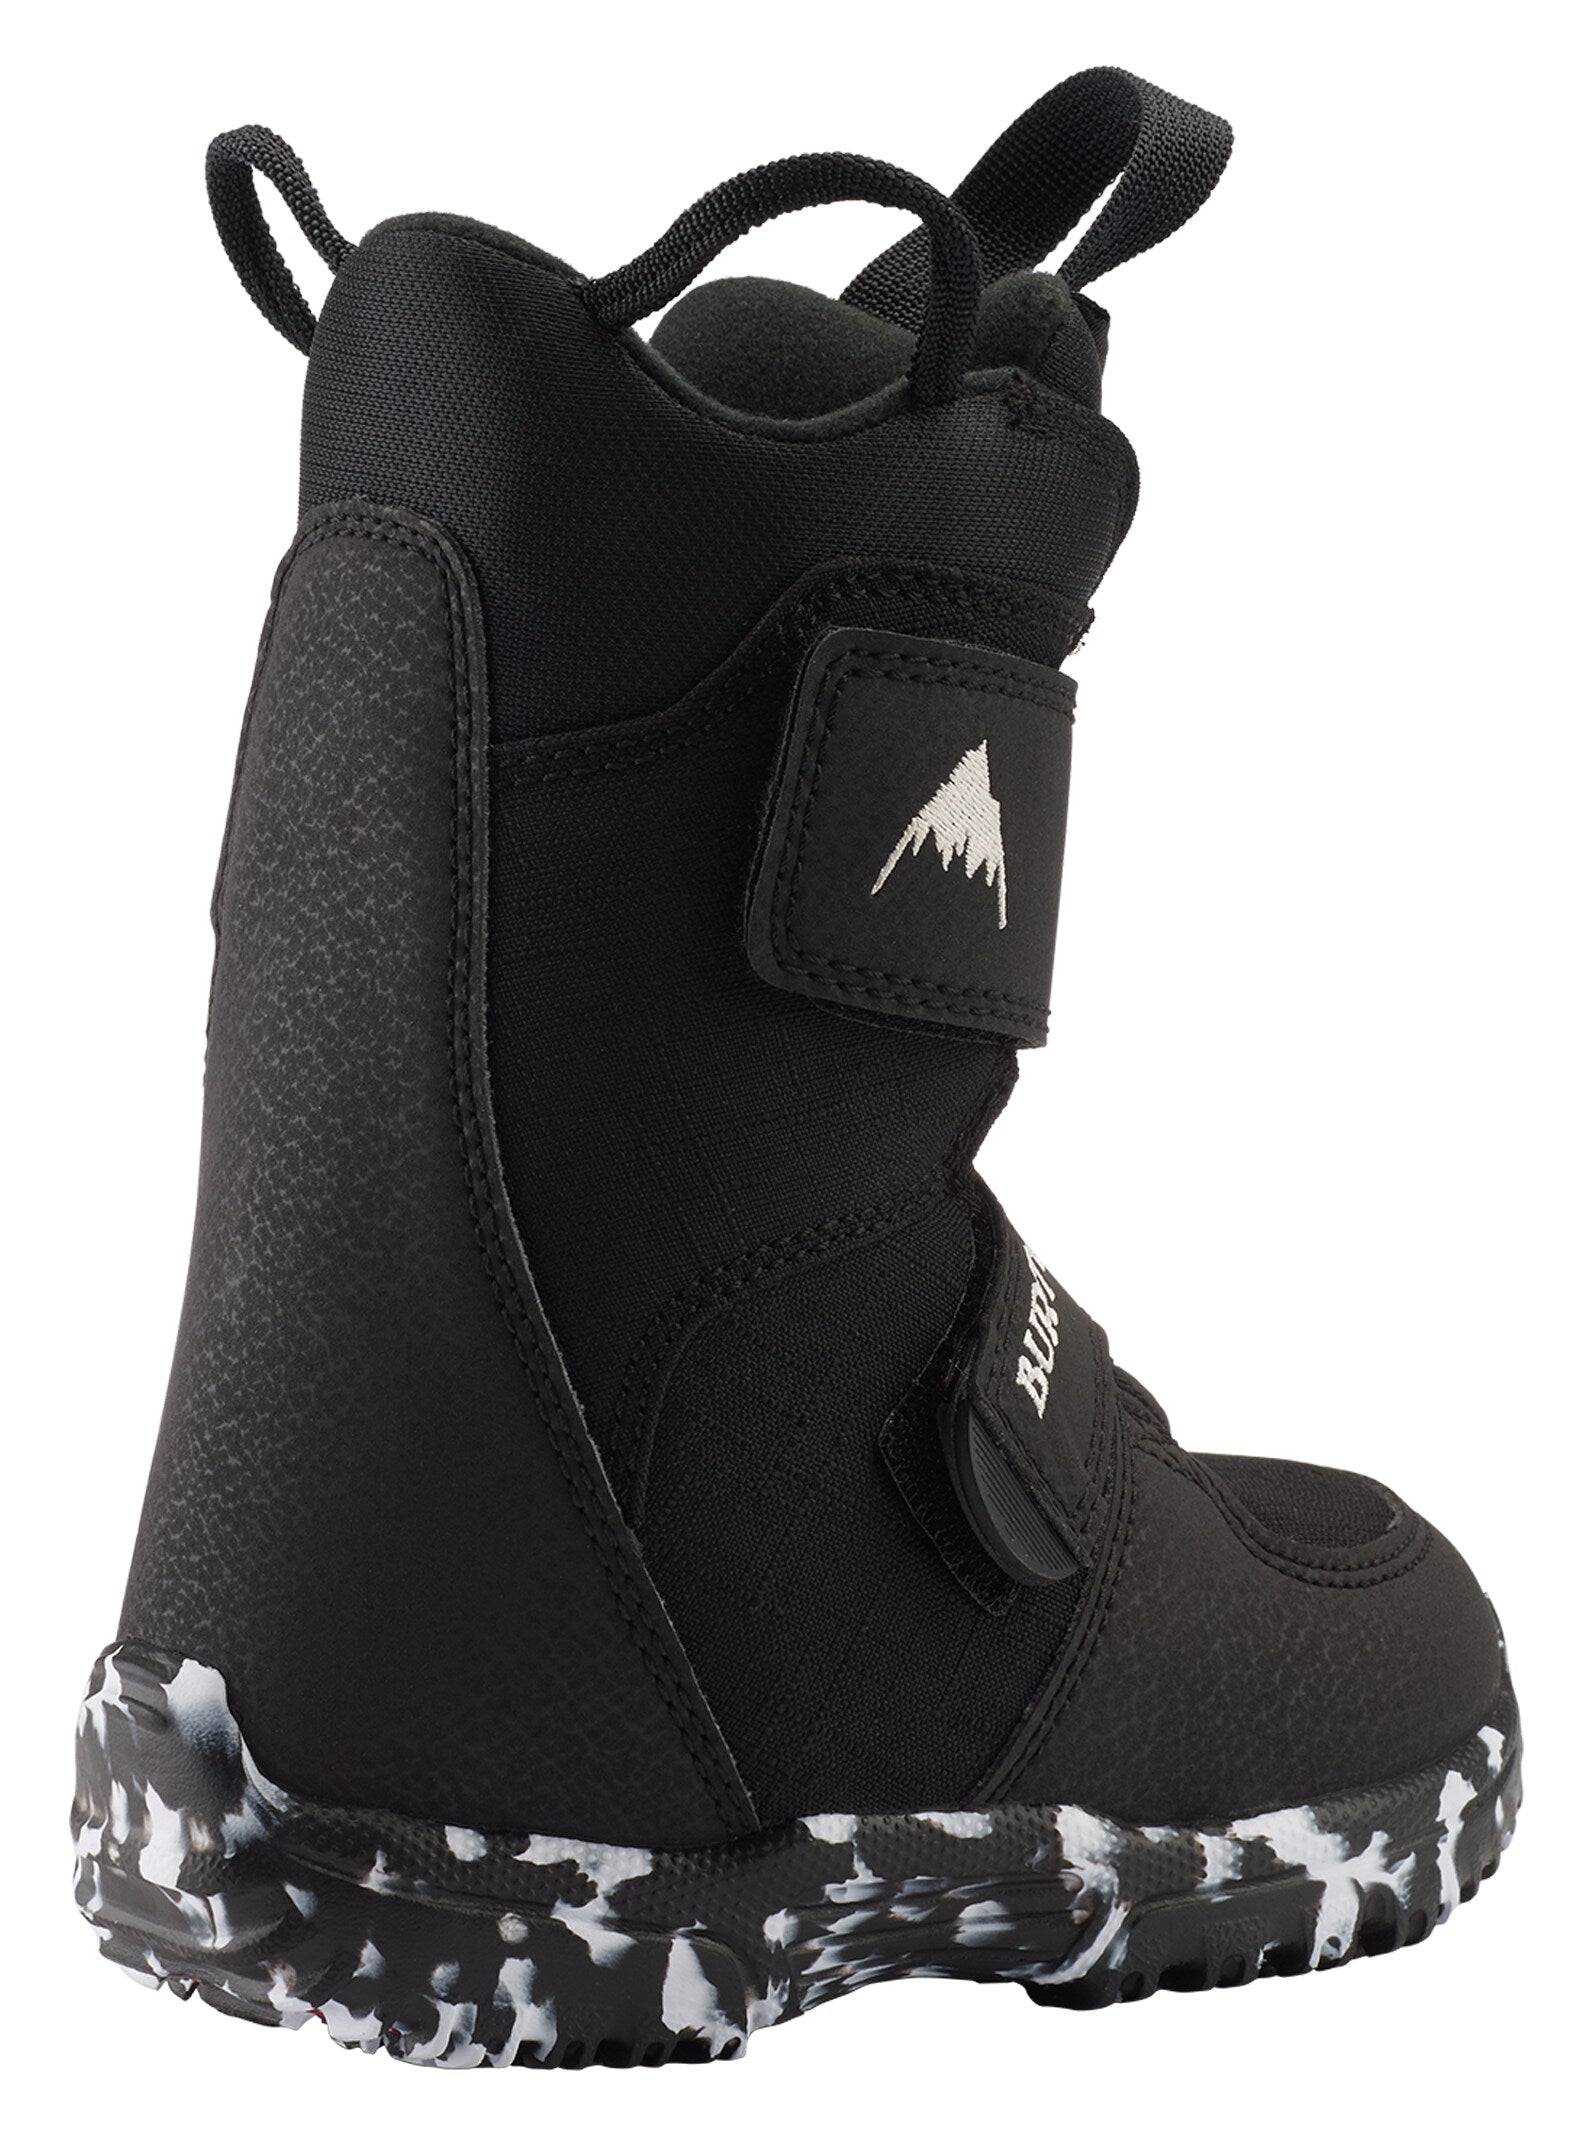 Toddlers' Burton Mini Grom Snowboard Boots Black Snowboard Boots